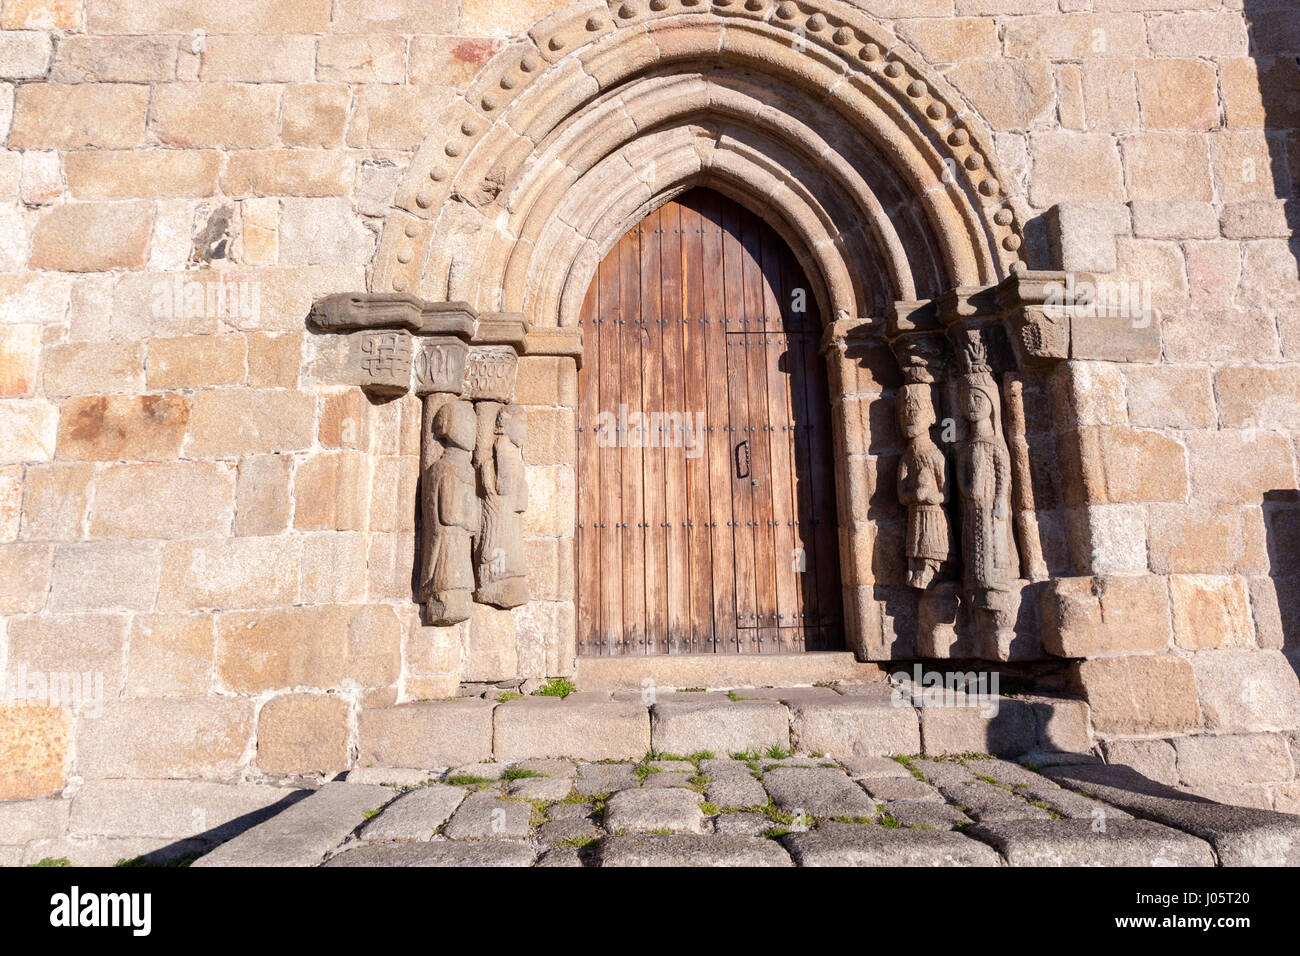 Church of Nuestra Señora del Azogue, Romanesque-Gothic church, Puebla de Sanabria, Zamora province, Spain Stock Photo